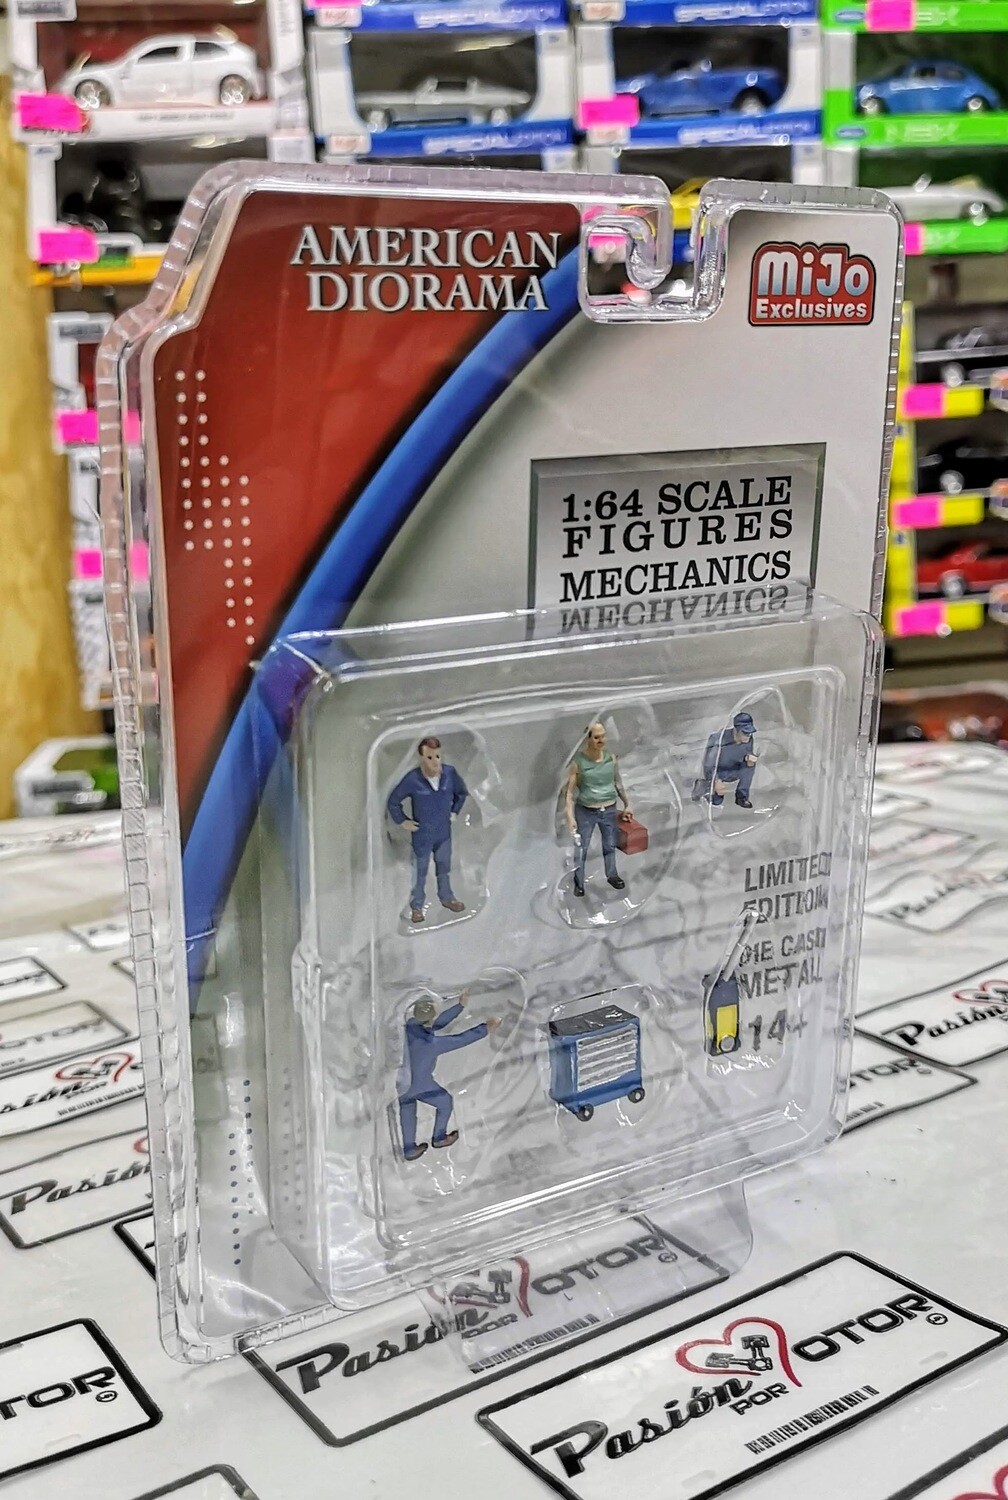 1:64 Set Mecanicos American Diorama Mijo Figures Mechanics